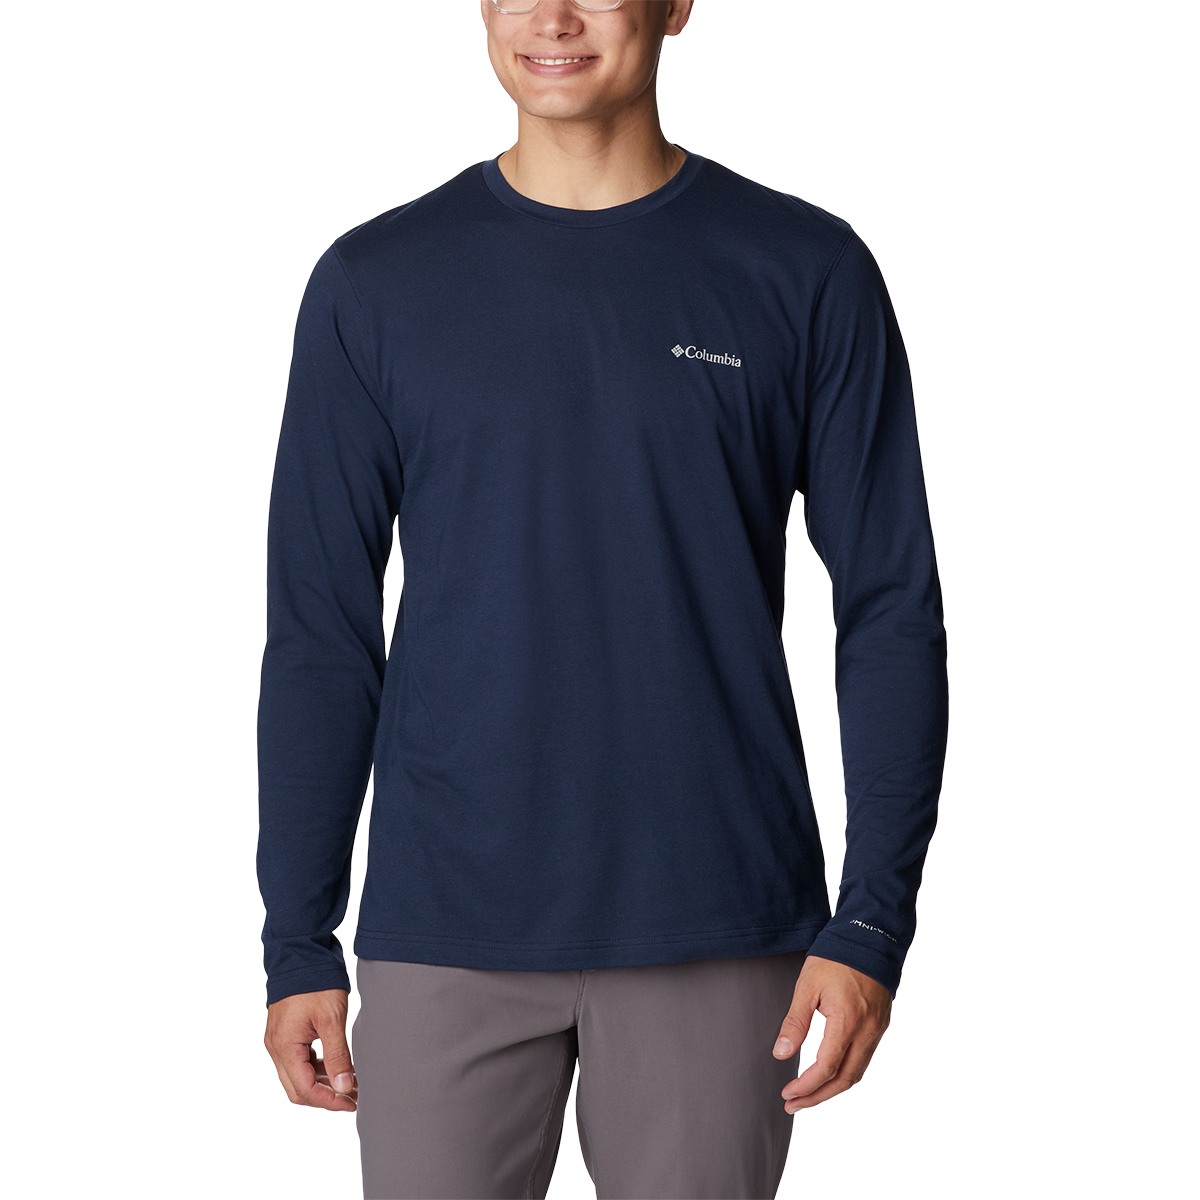 Columbia Men's Thistletown Hills Long-Sleeve Crew Shirt - Size 2XL